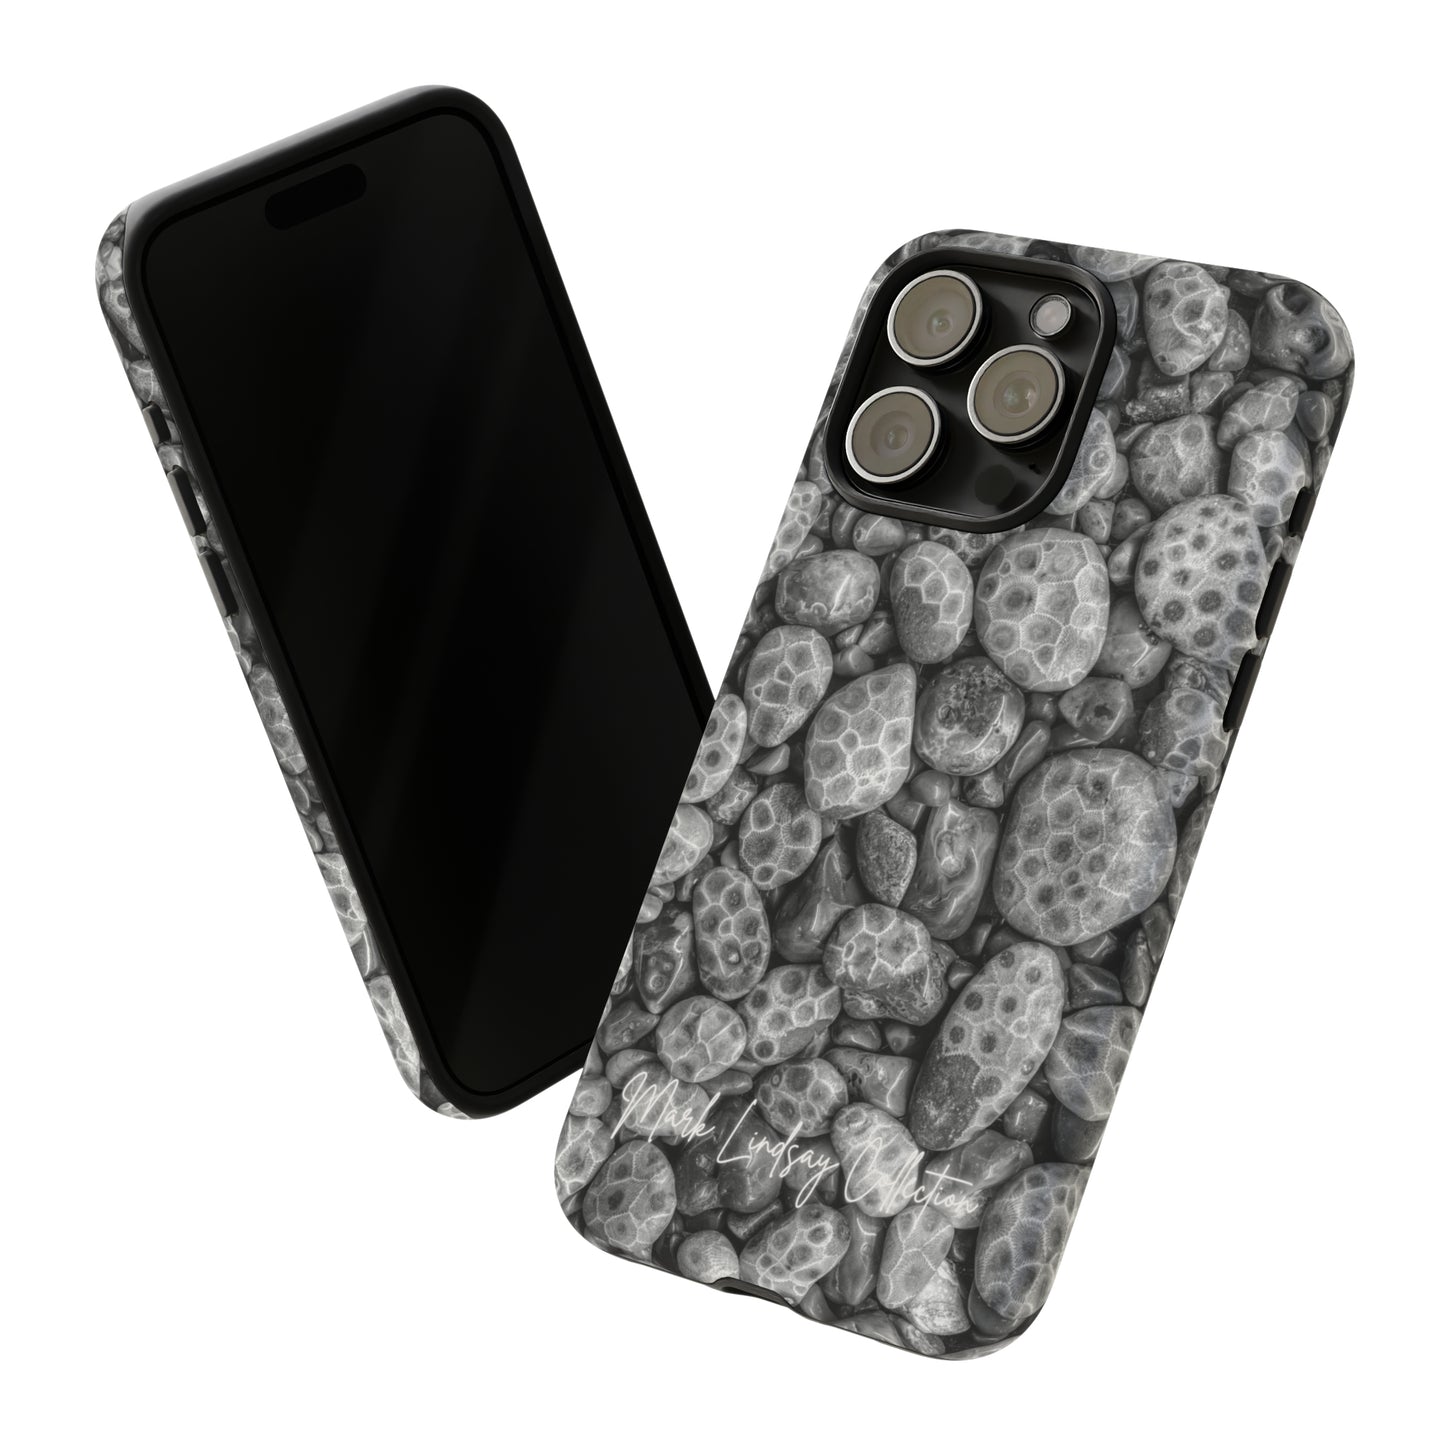 Petoskey Stone Impact Resistant Tough Case (IPhone)